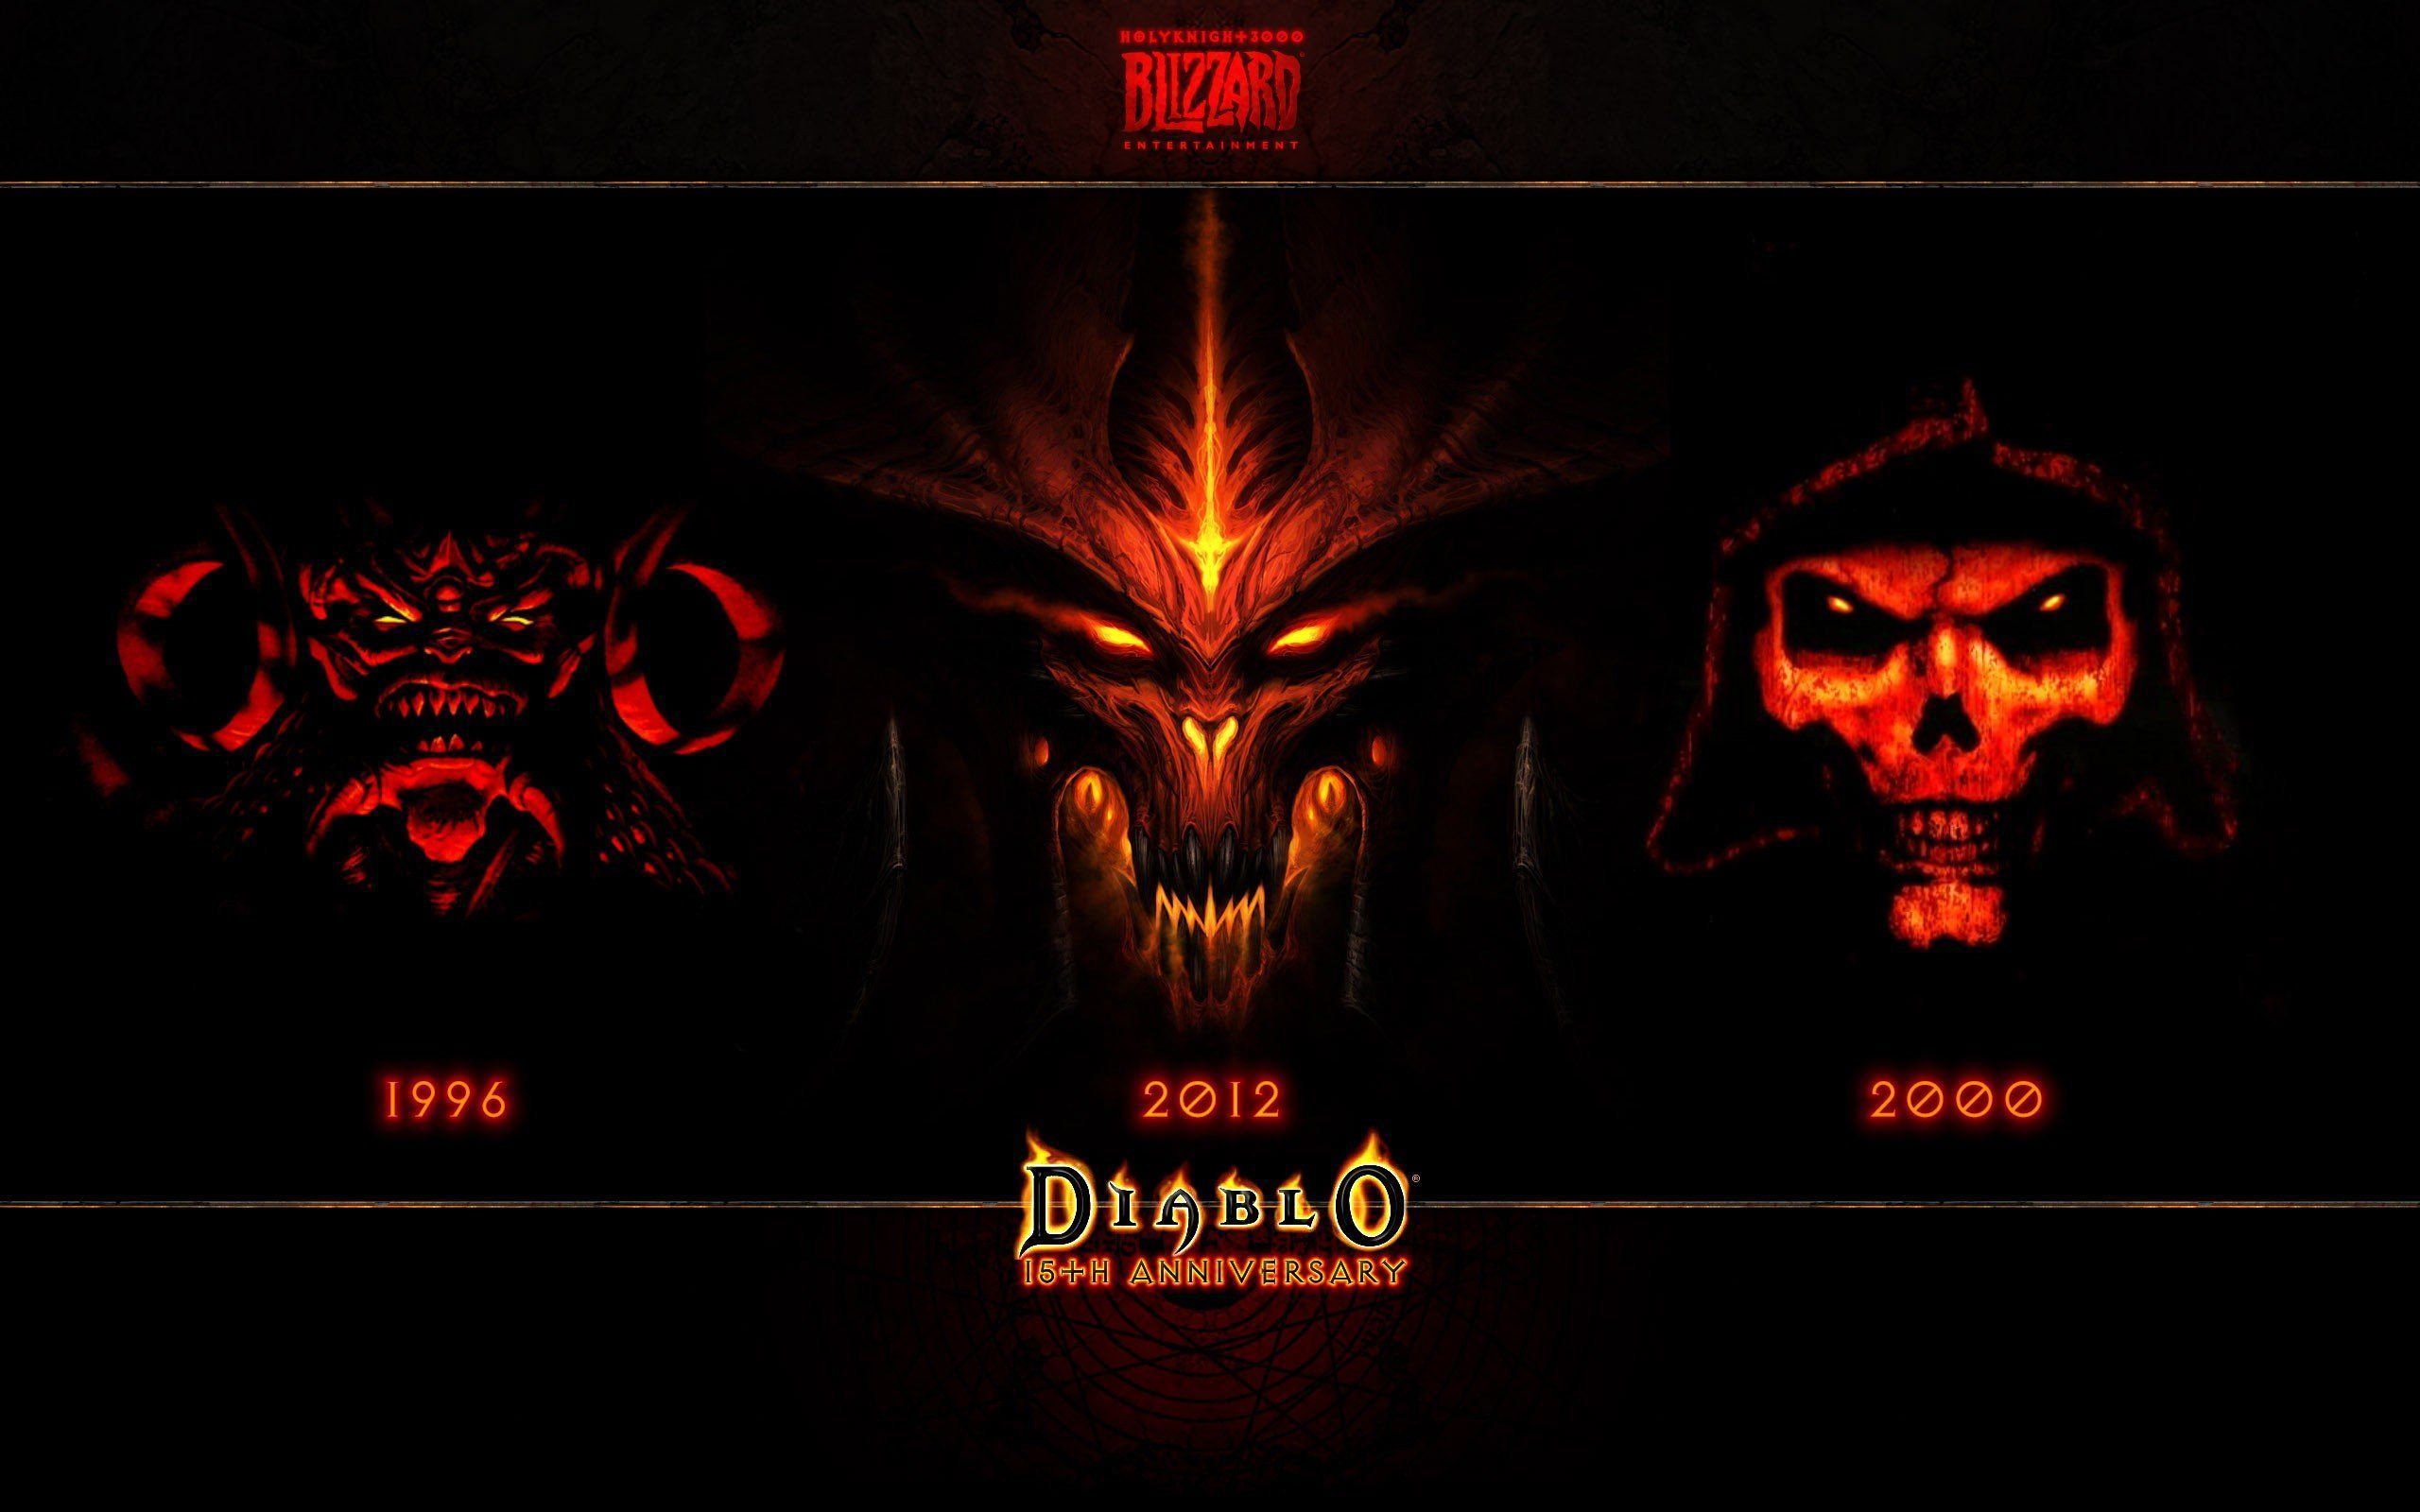 Diablo Blizzard Entertainment Diablo III anniversary wallpaper ...